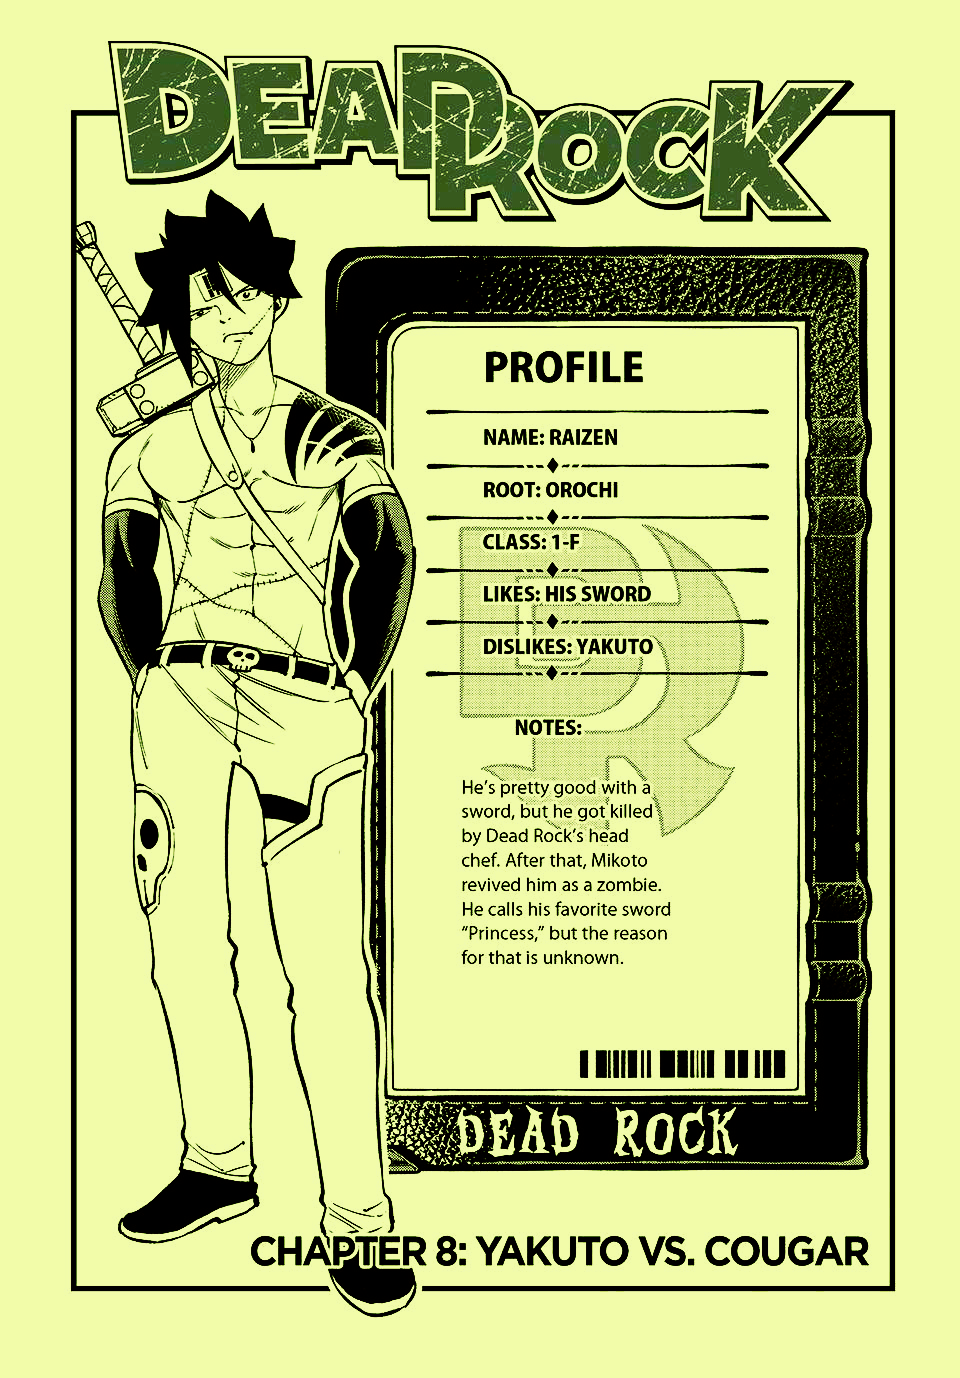 Introducing: Zelecia The Black Wizard! Dead Rock Chapter 8 BREAKDOWN